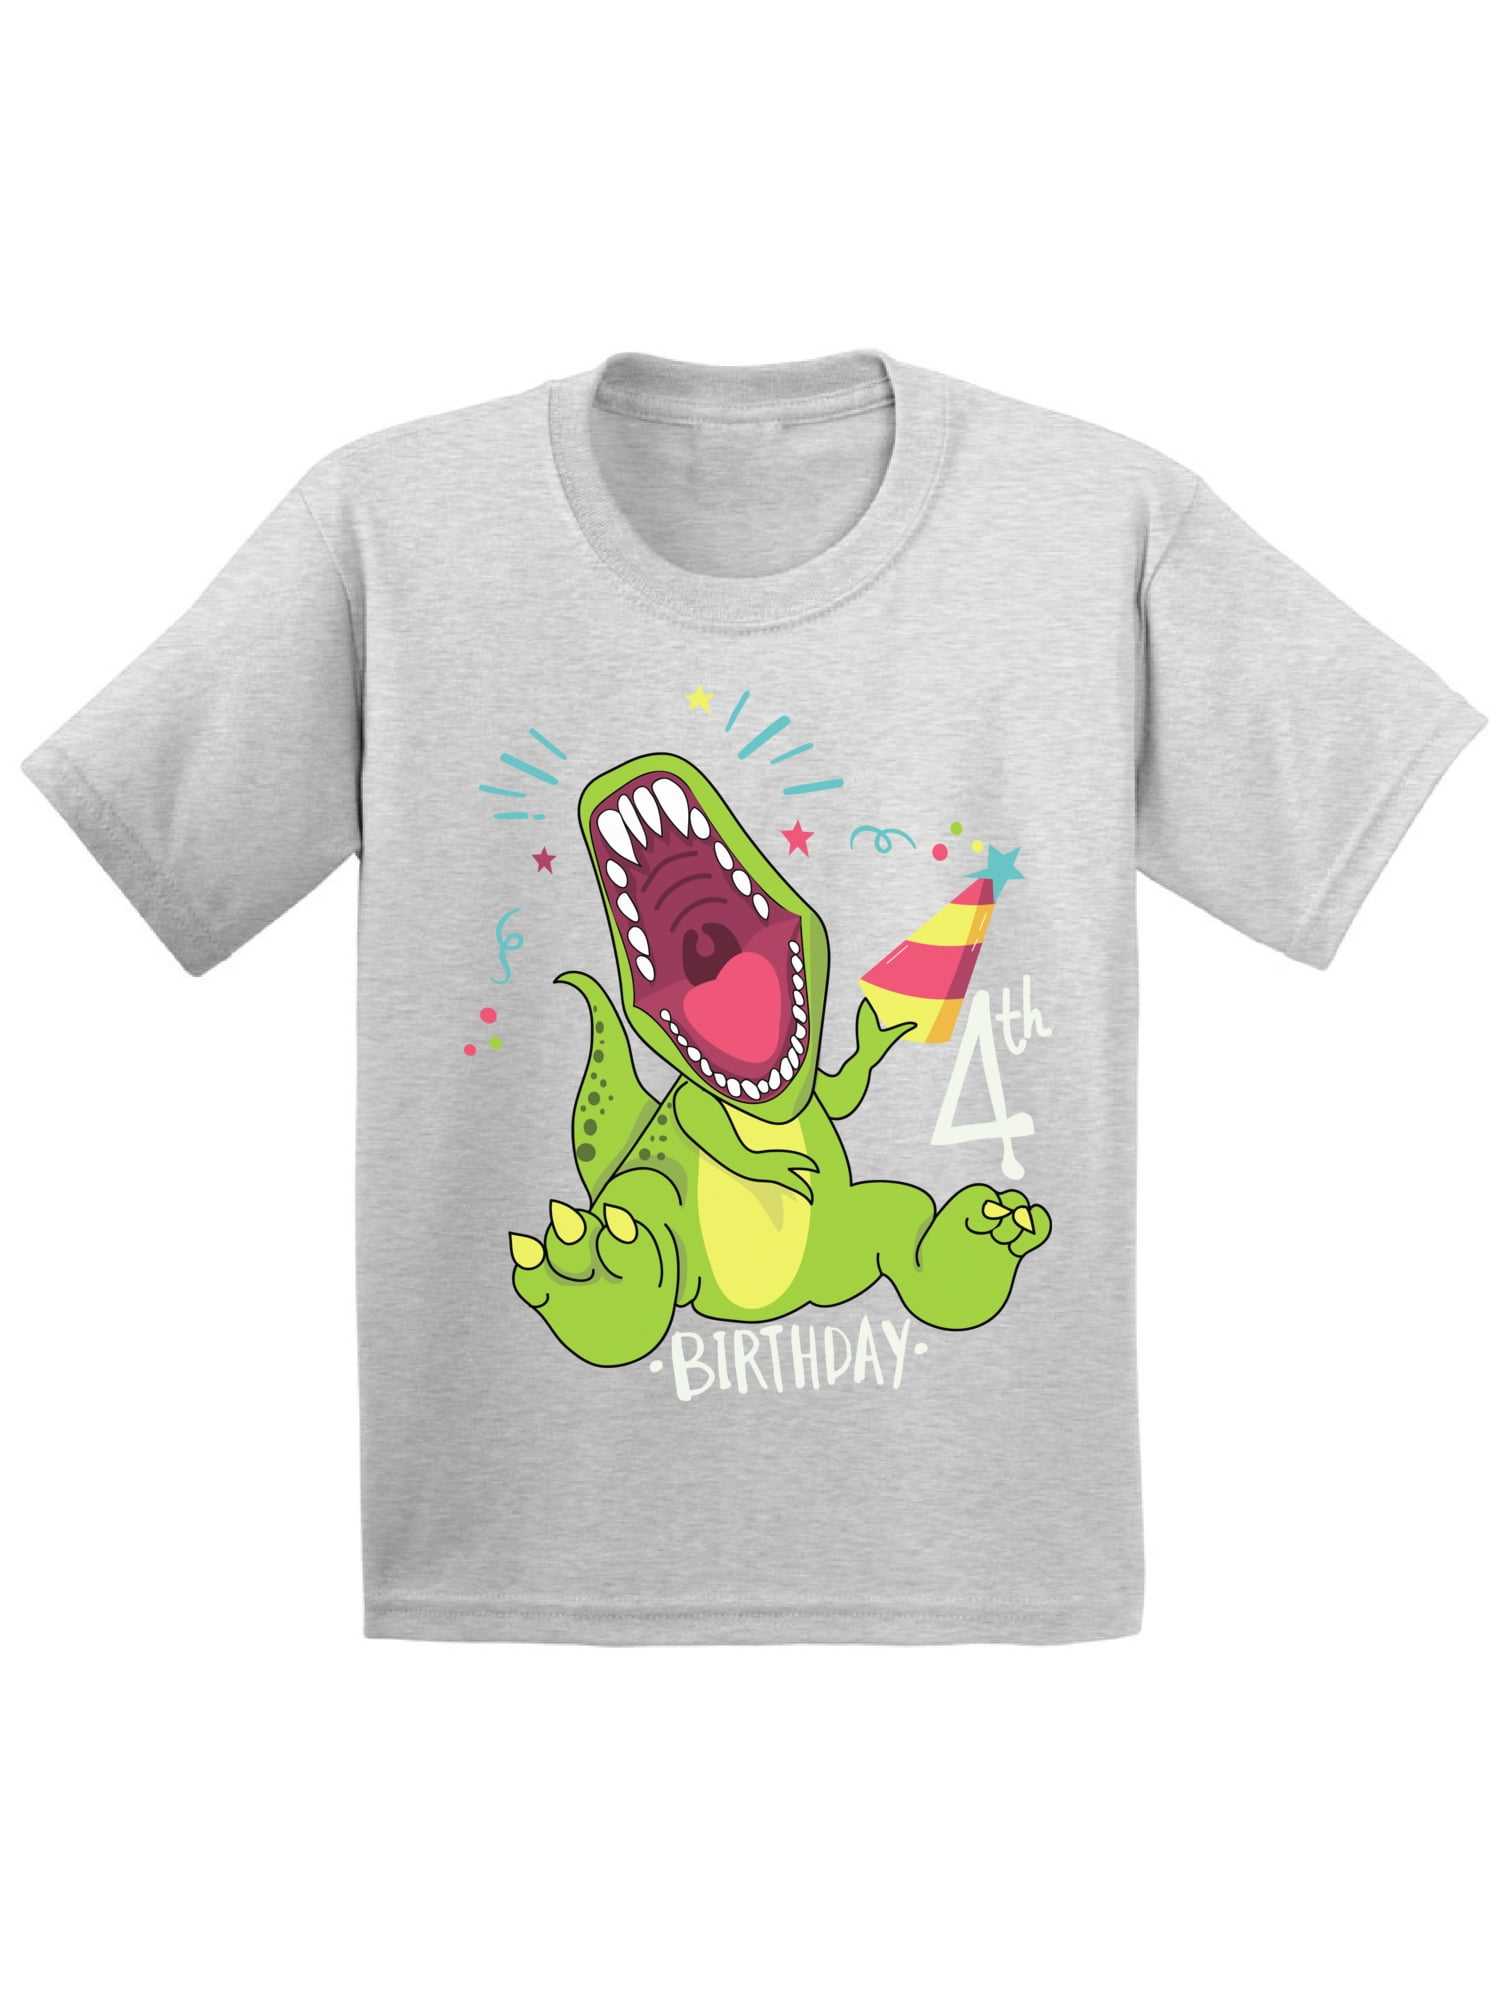 Personalized dinosaur shirt toddler shirt boy dinosaur shirt custom gift for kids, dinosaur birthday shirt for kids birthday shirt boy